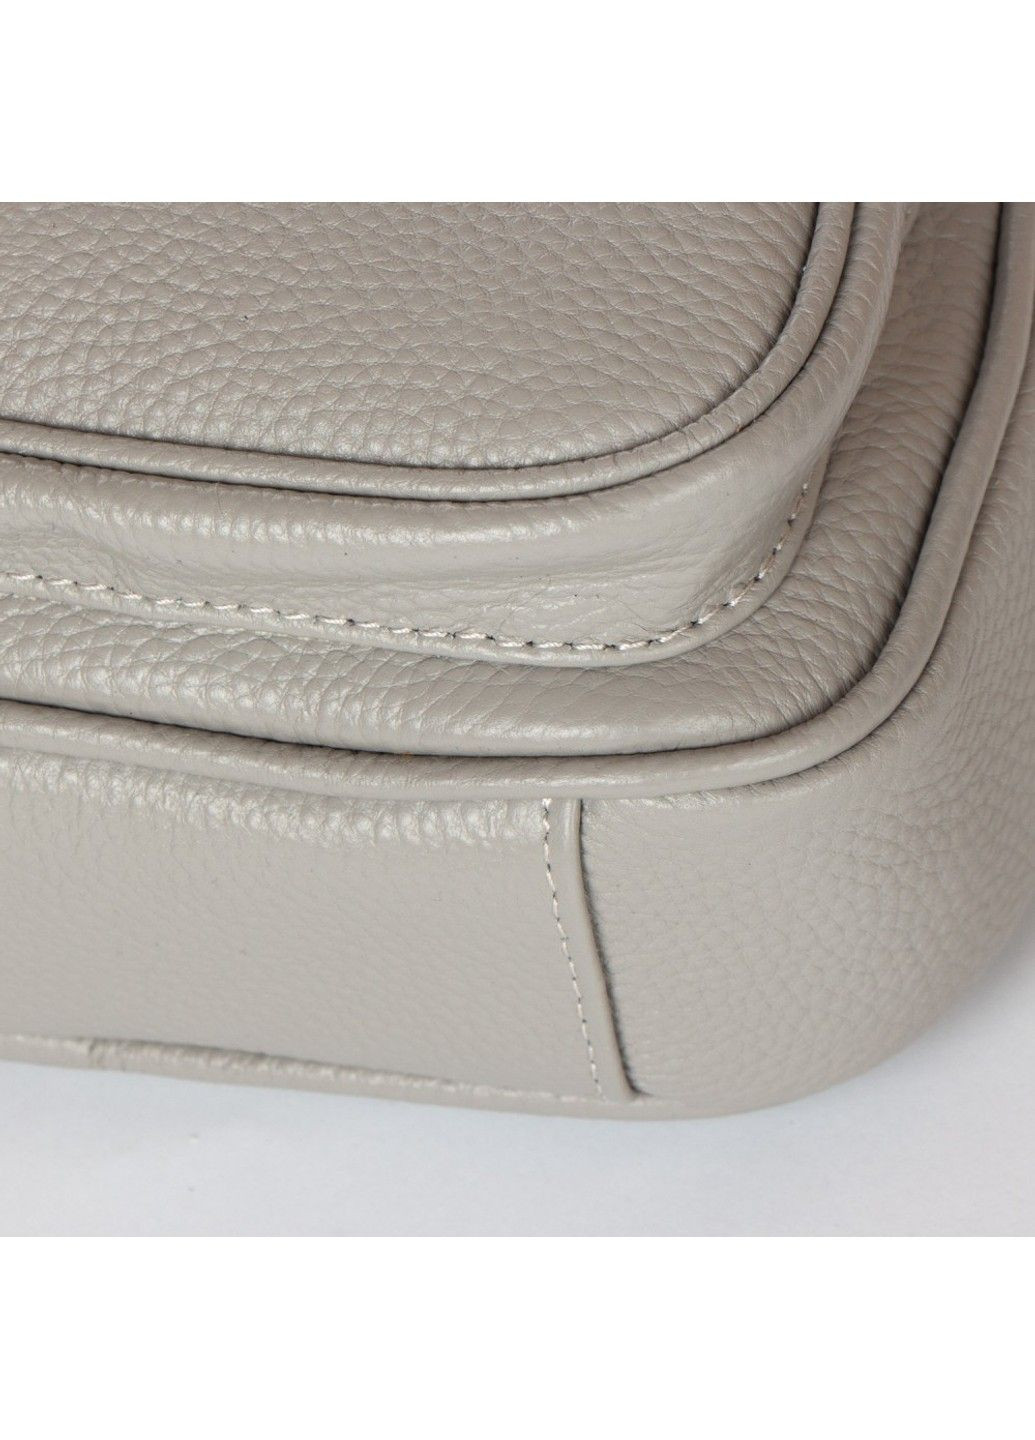 Женская кожаная сумка 99112 white-grey Alex Rai (291682977)